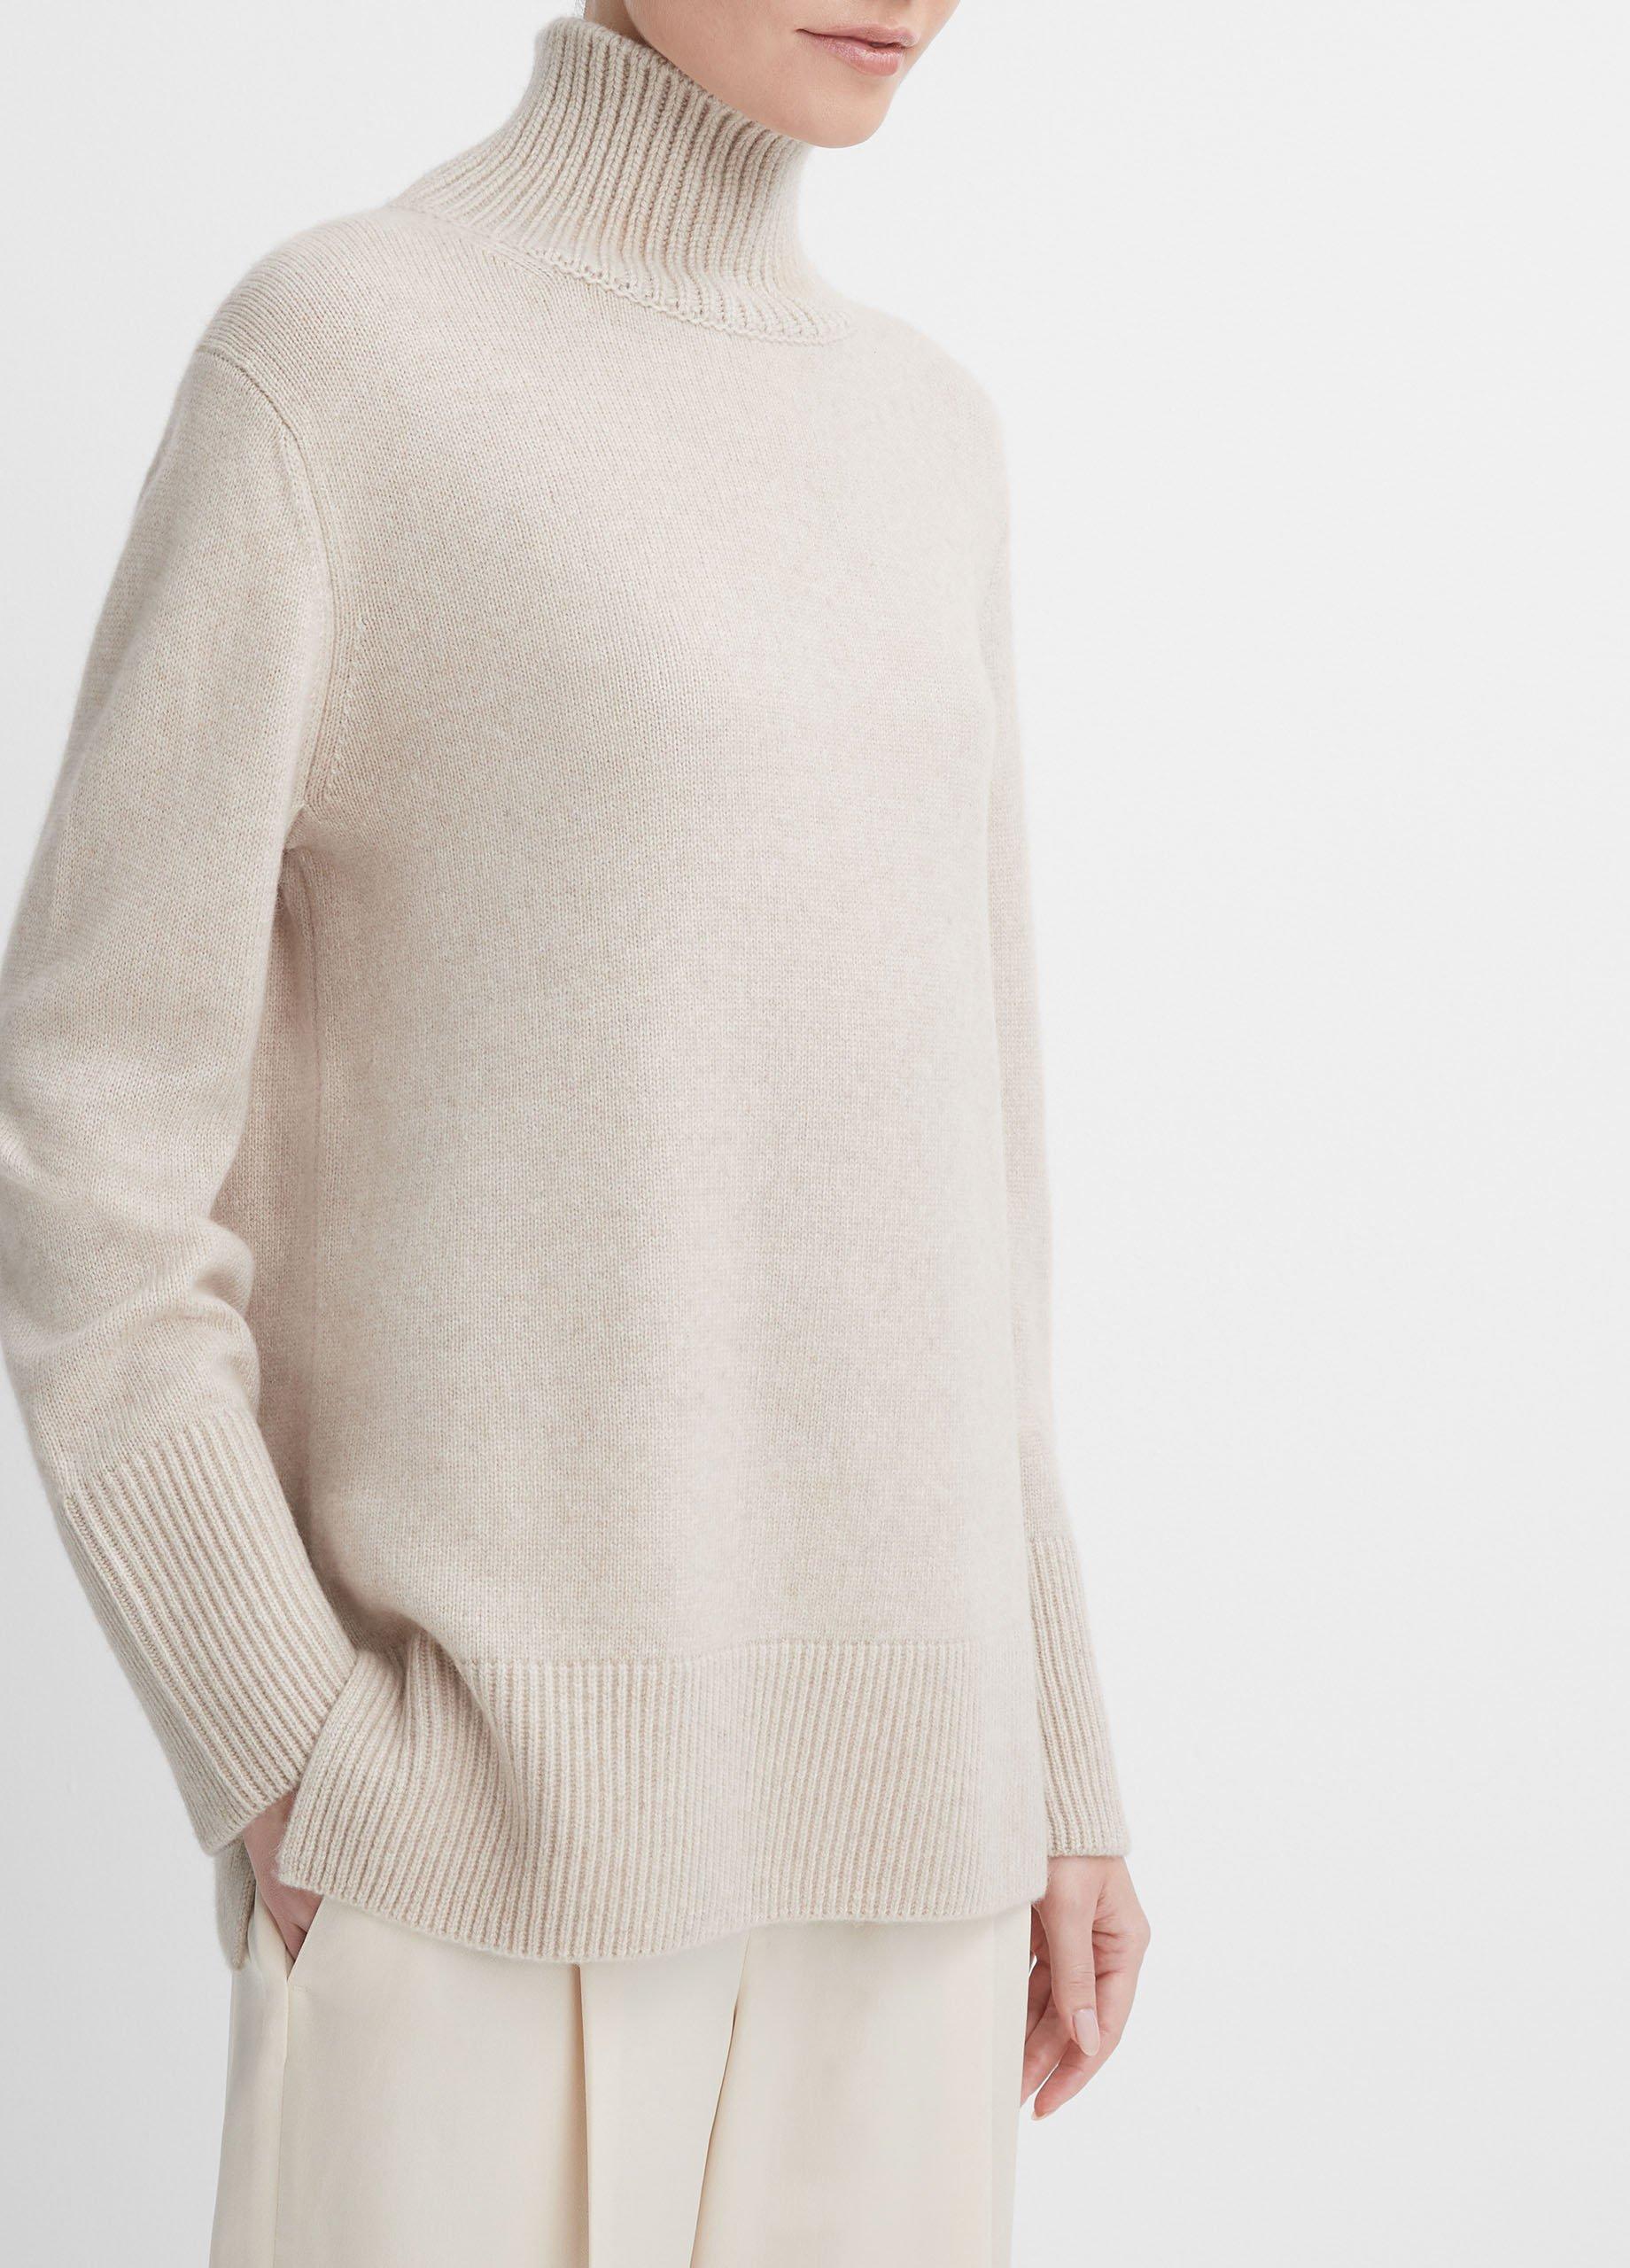 Mixed-Gauge Wool-Cashmere Turtleneck Tunic Sweater